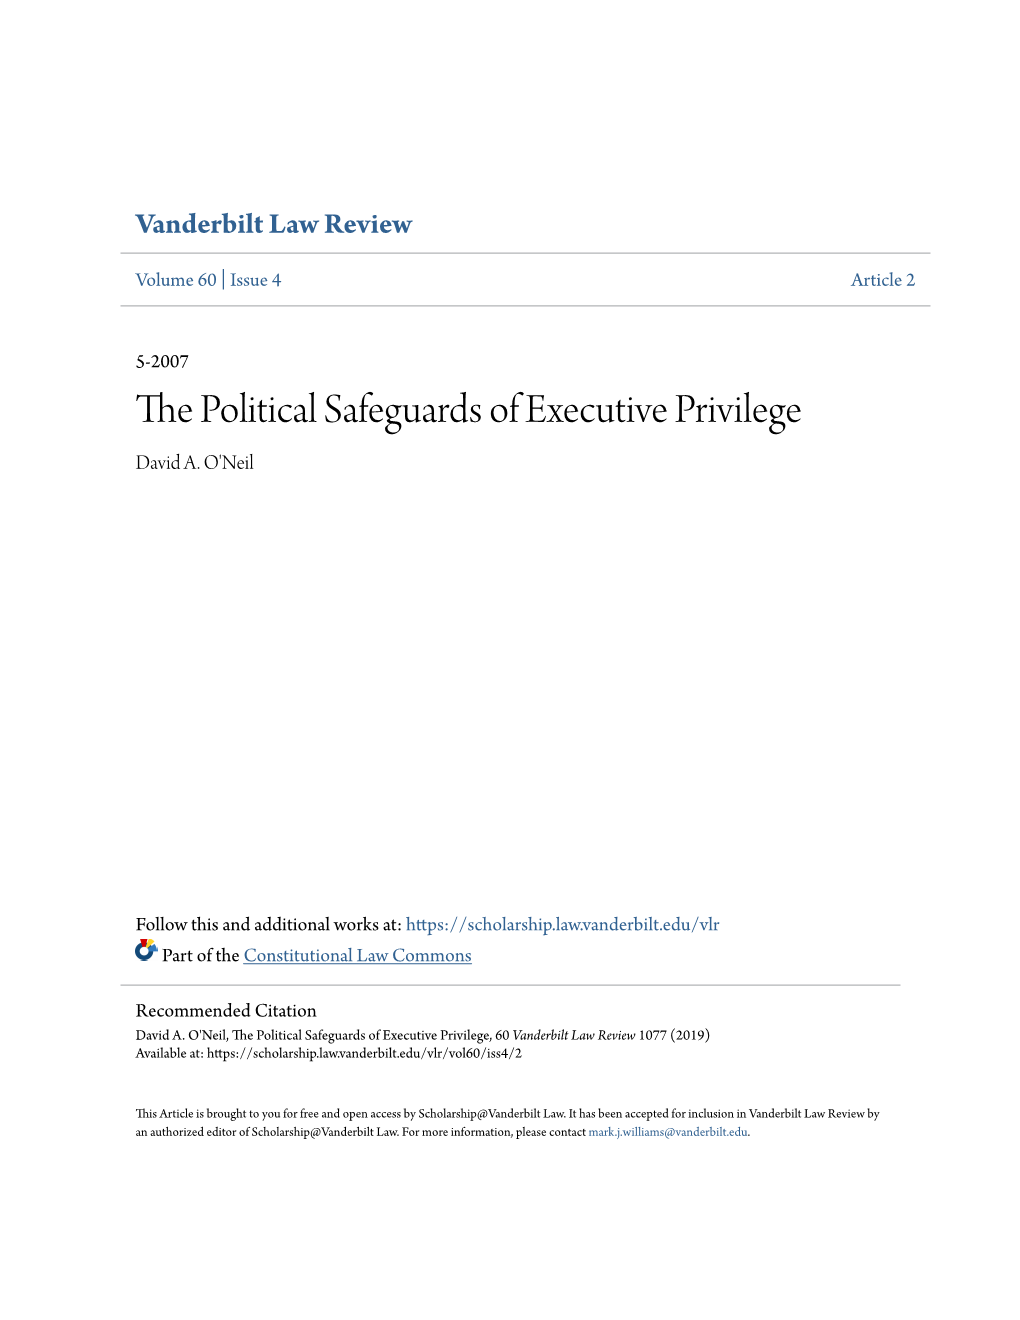 The Political Safeguards of Executive Privilege David A